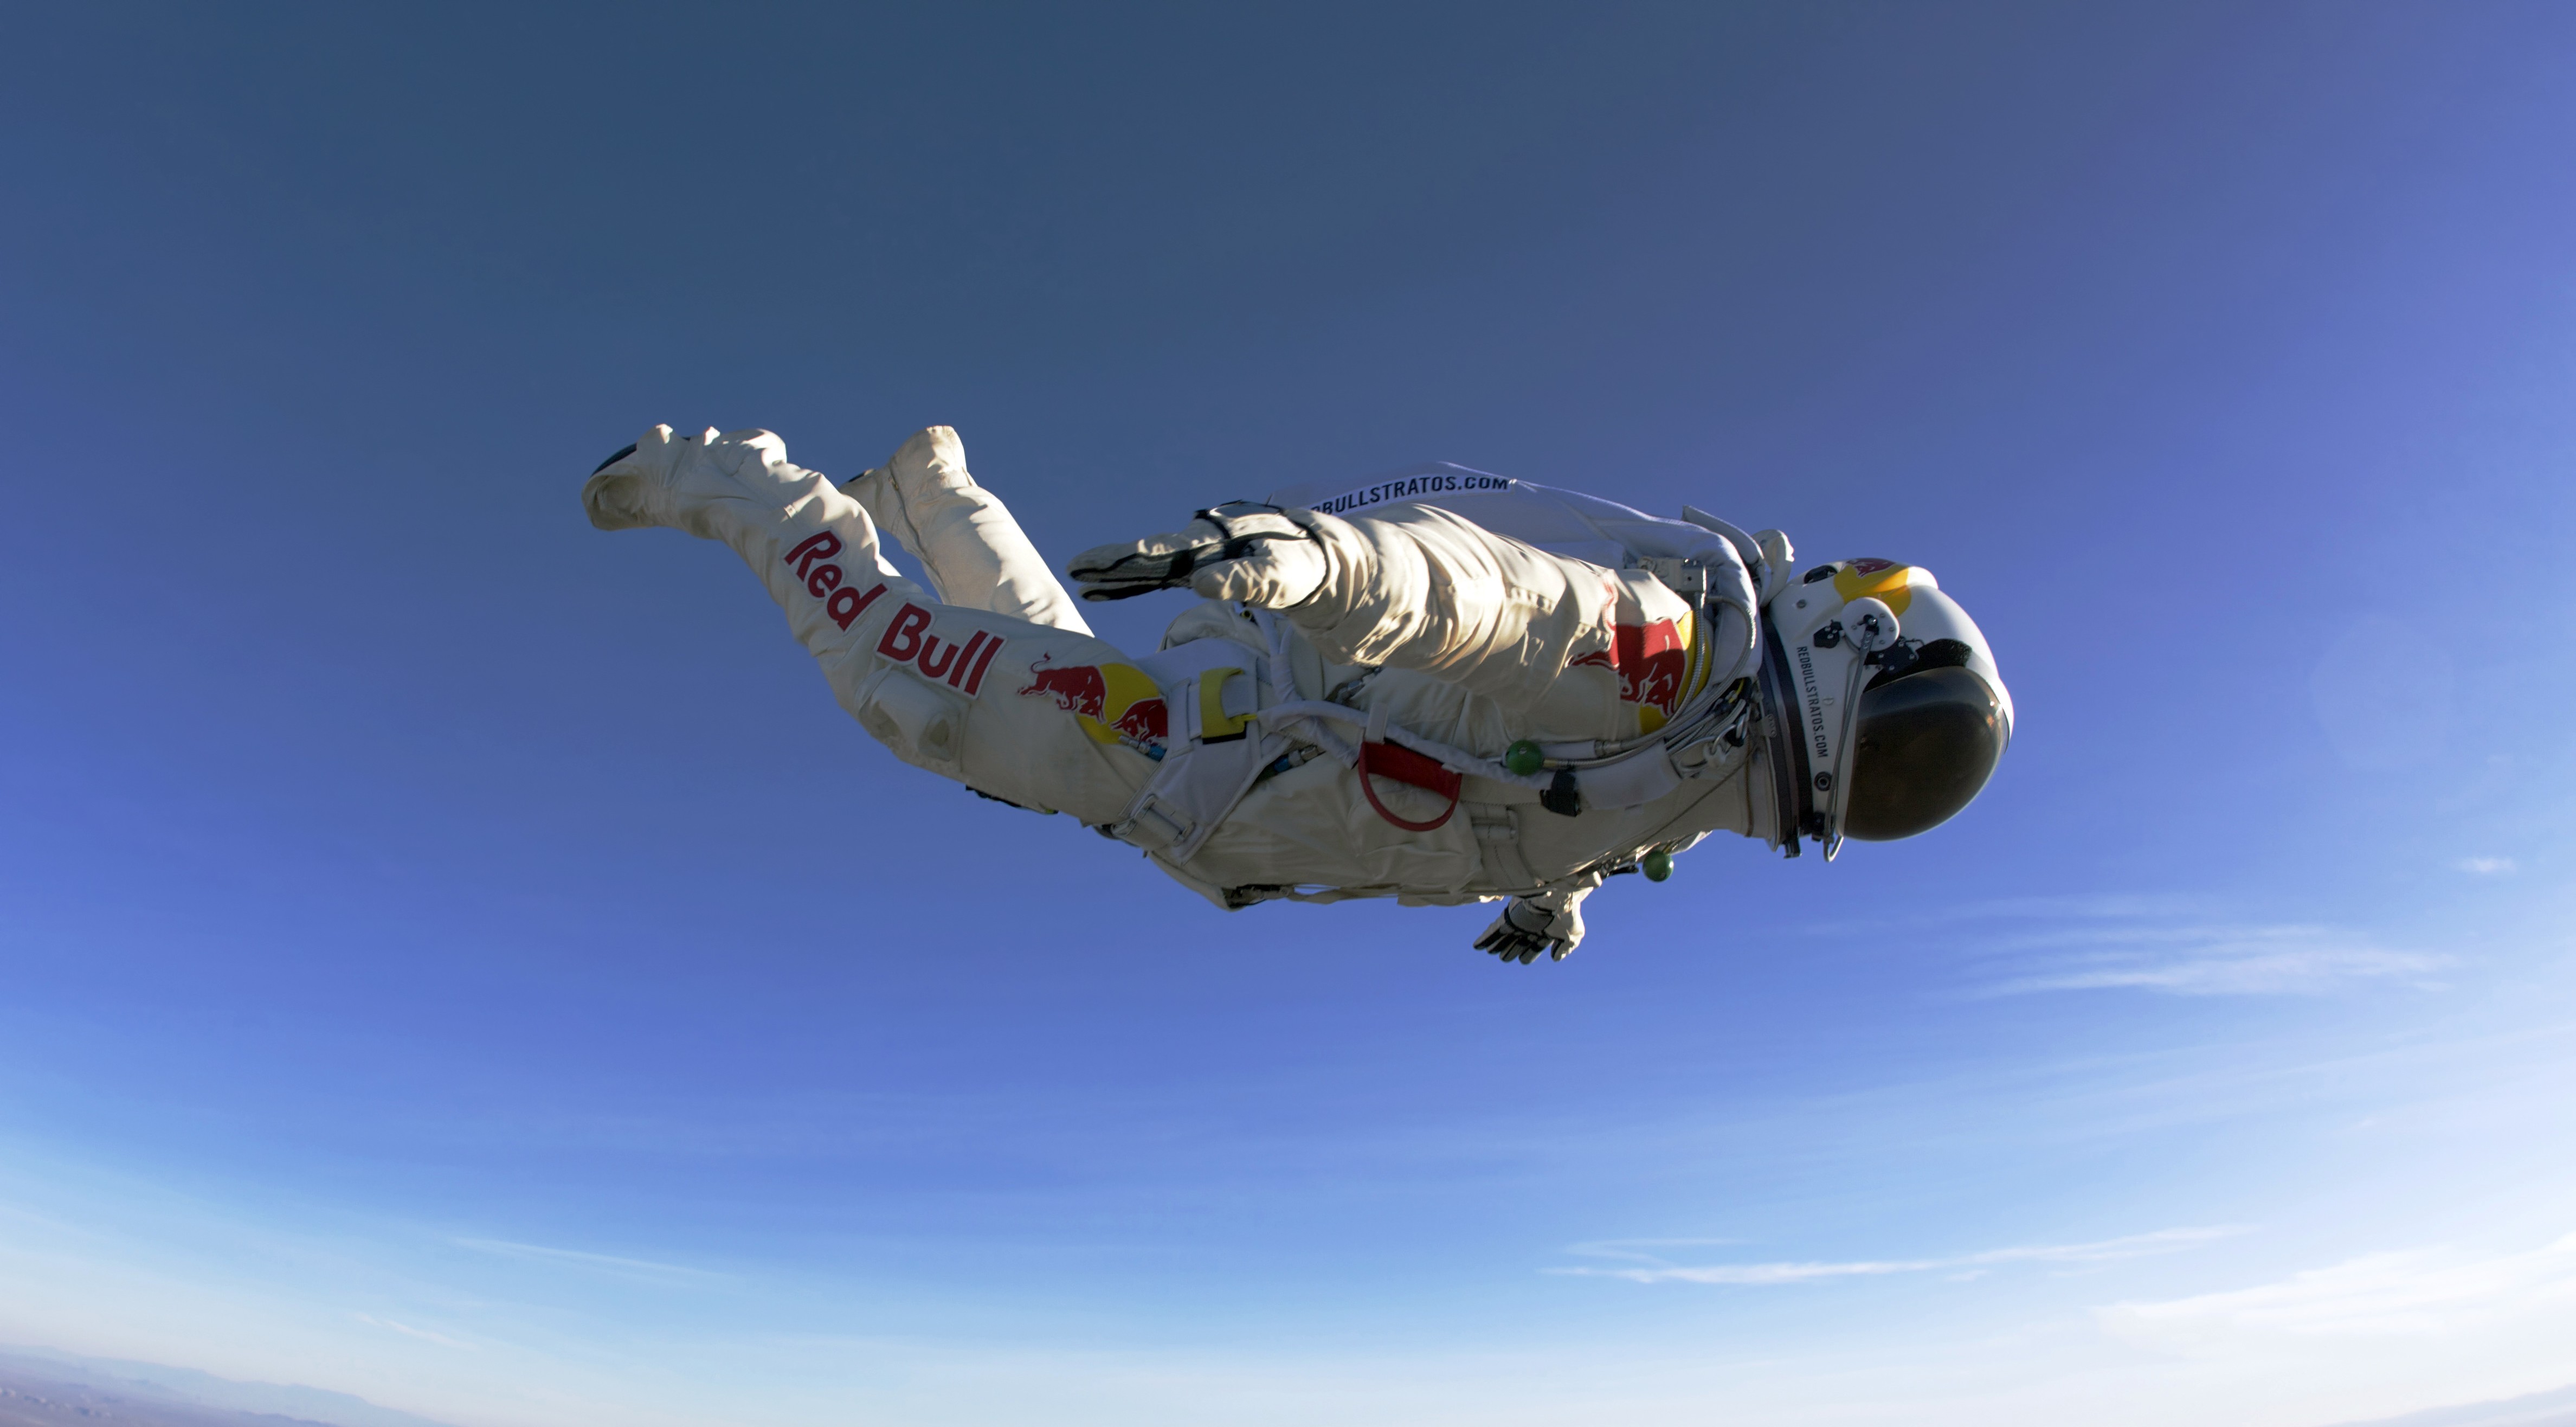 spacesuit men sky red bull felix baumgartner falling flying skydiving